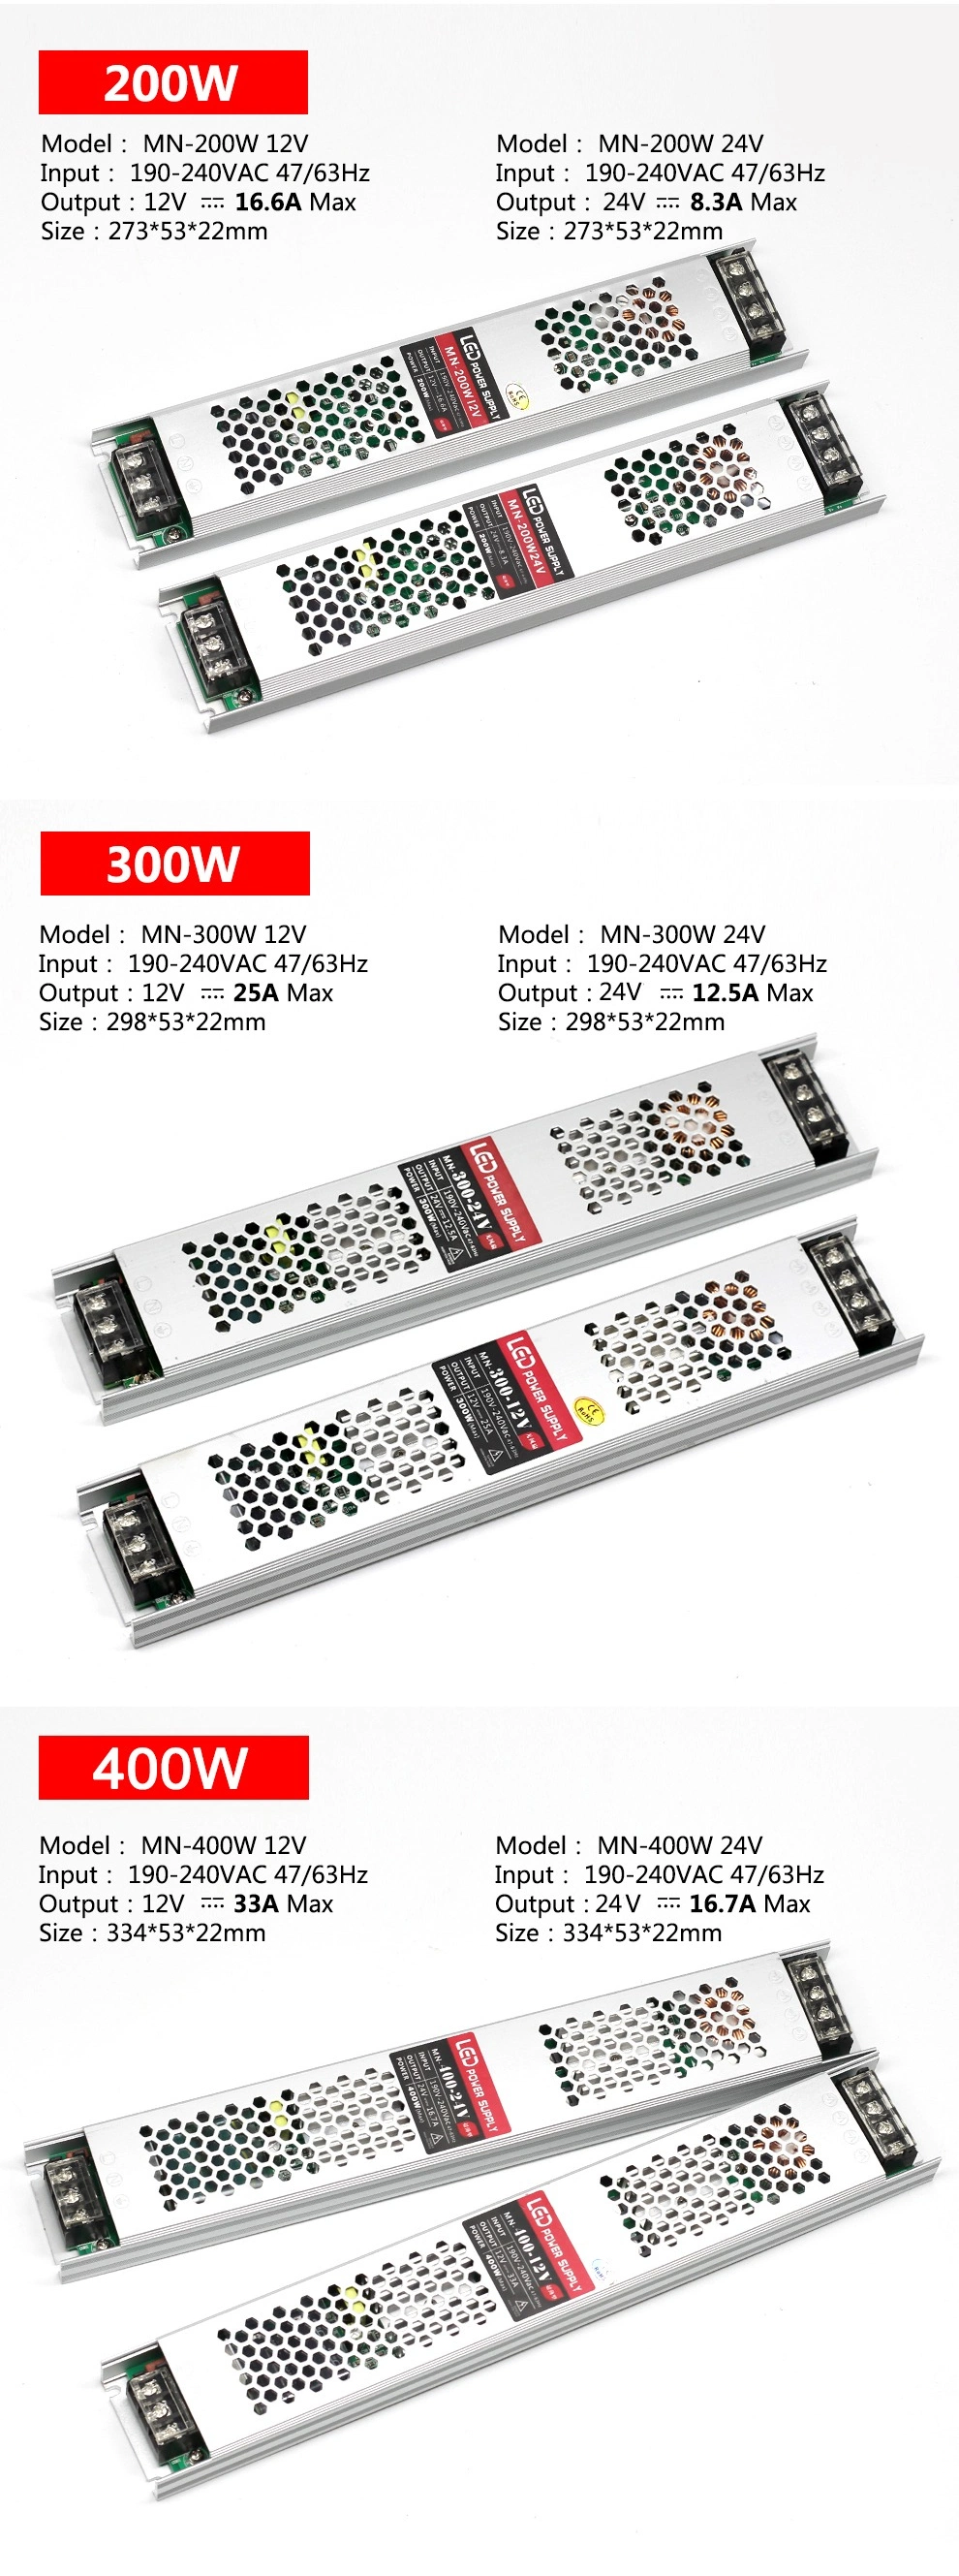 Lighting Transformer DC 12V/24V Power Supply Adapter 5A 12A Ultra Thin LED Strip Switch Driver Lamp 60W 100W 150W 200W 300W 400W